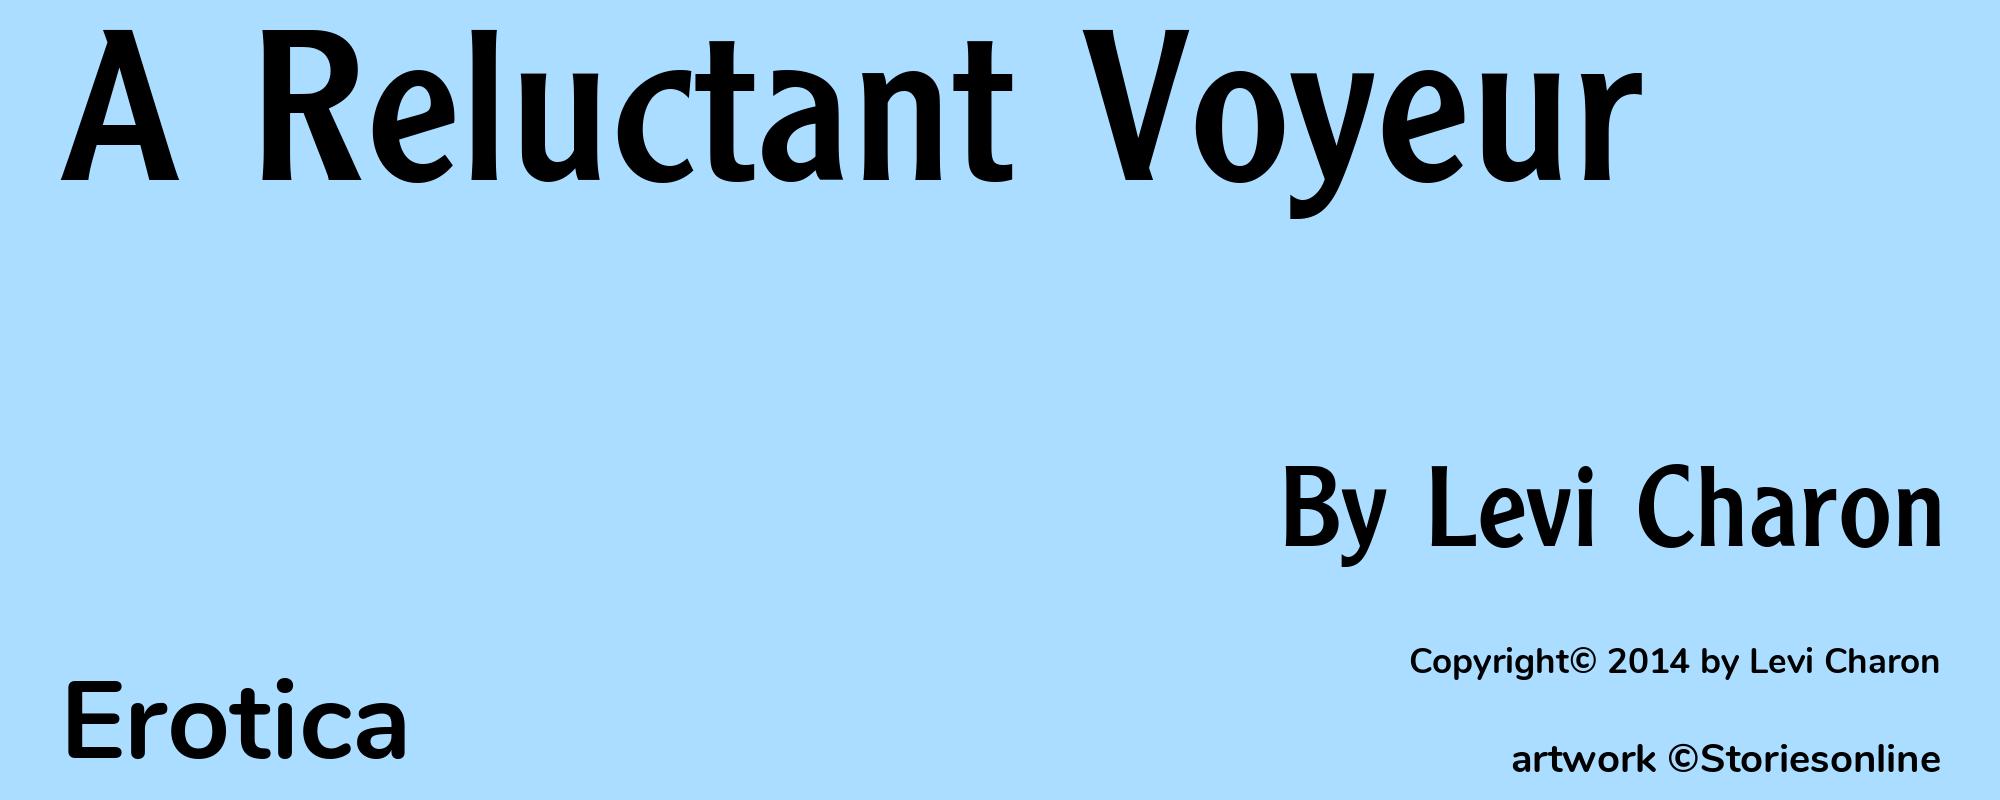 A Reluctant Voyeur - Cover